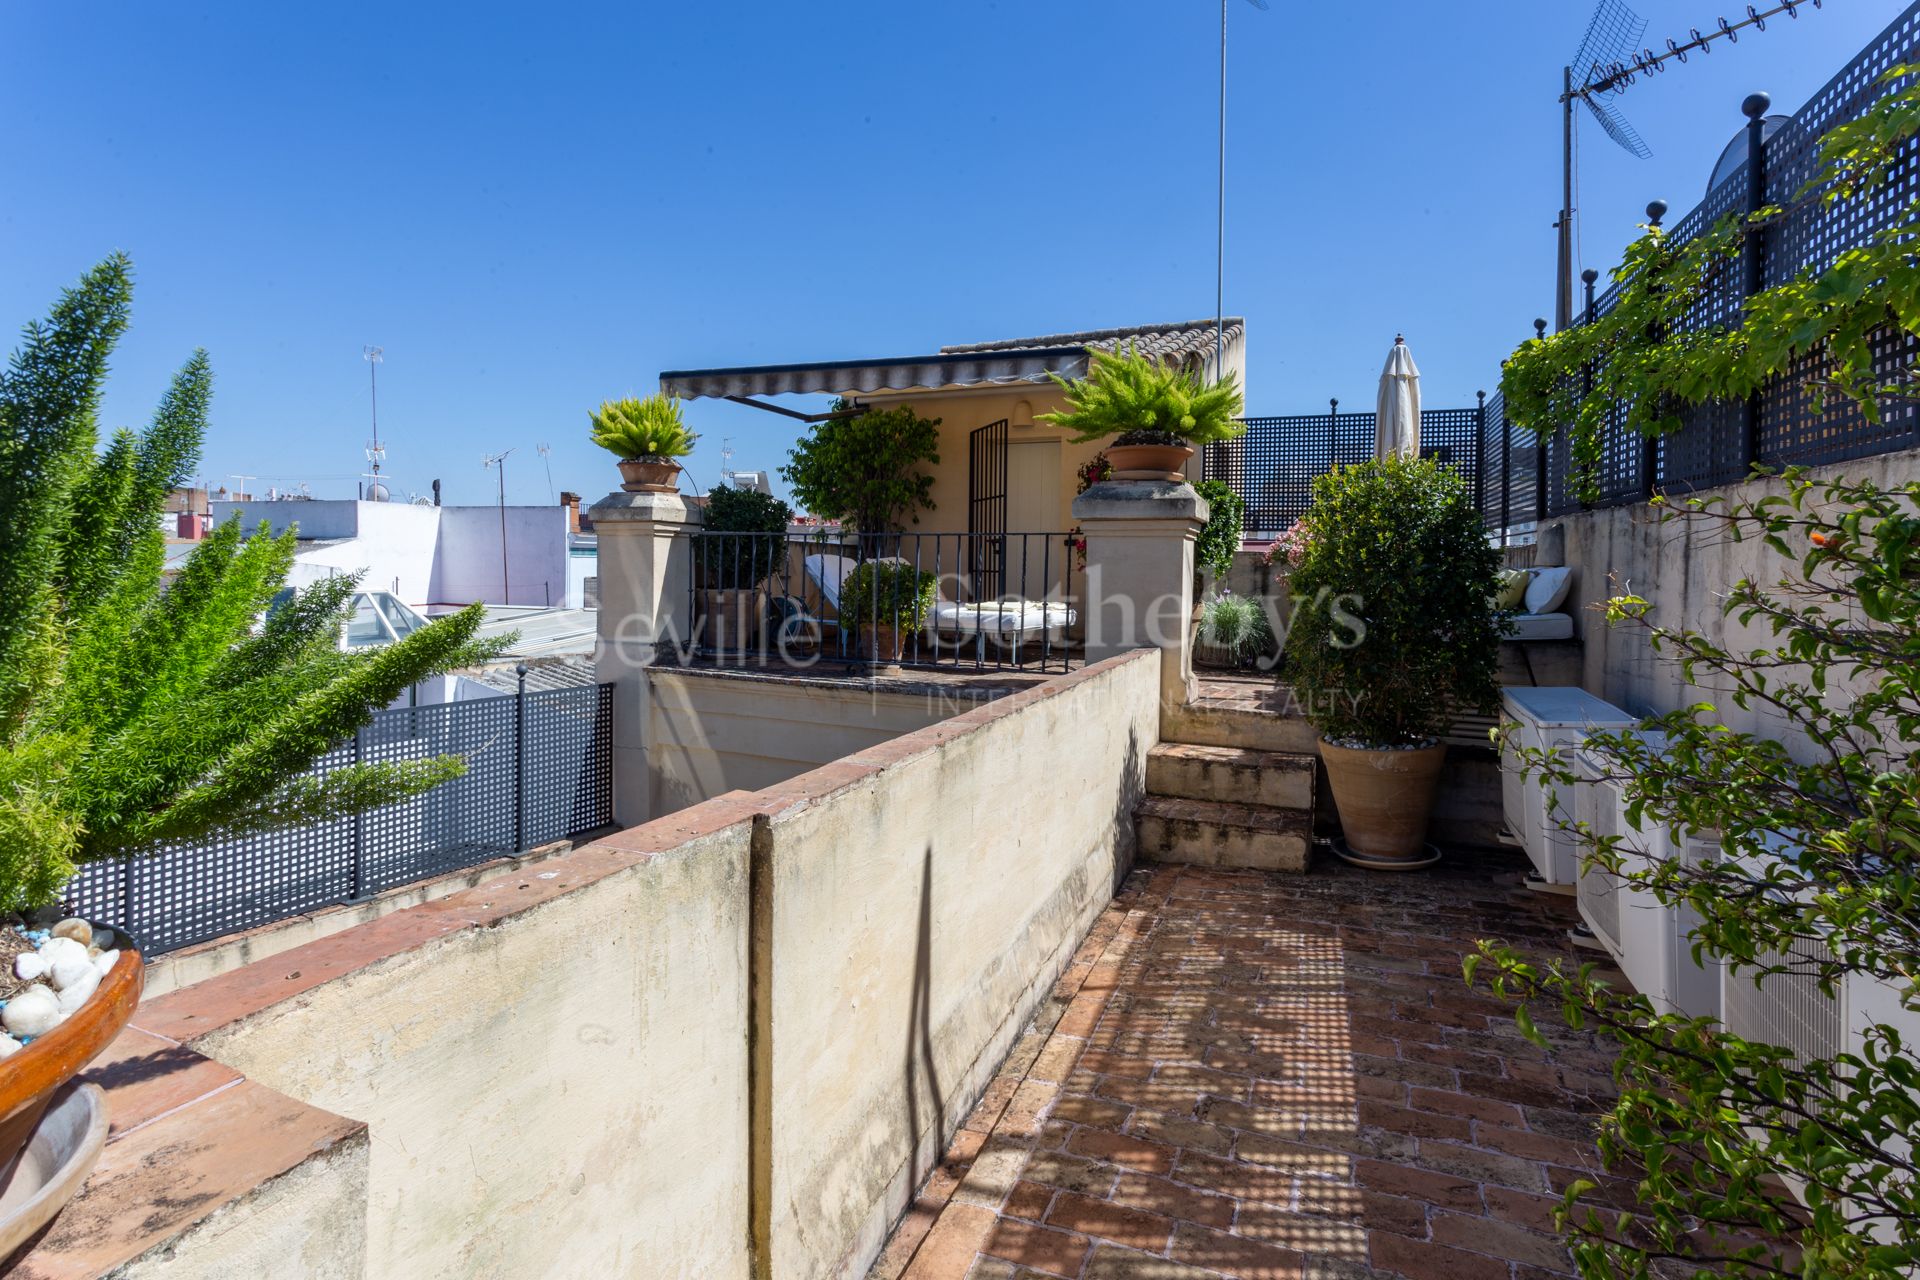 Casa señorial totalmente restaurada con piscina en zona privilegiada del centro de Sevilla